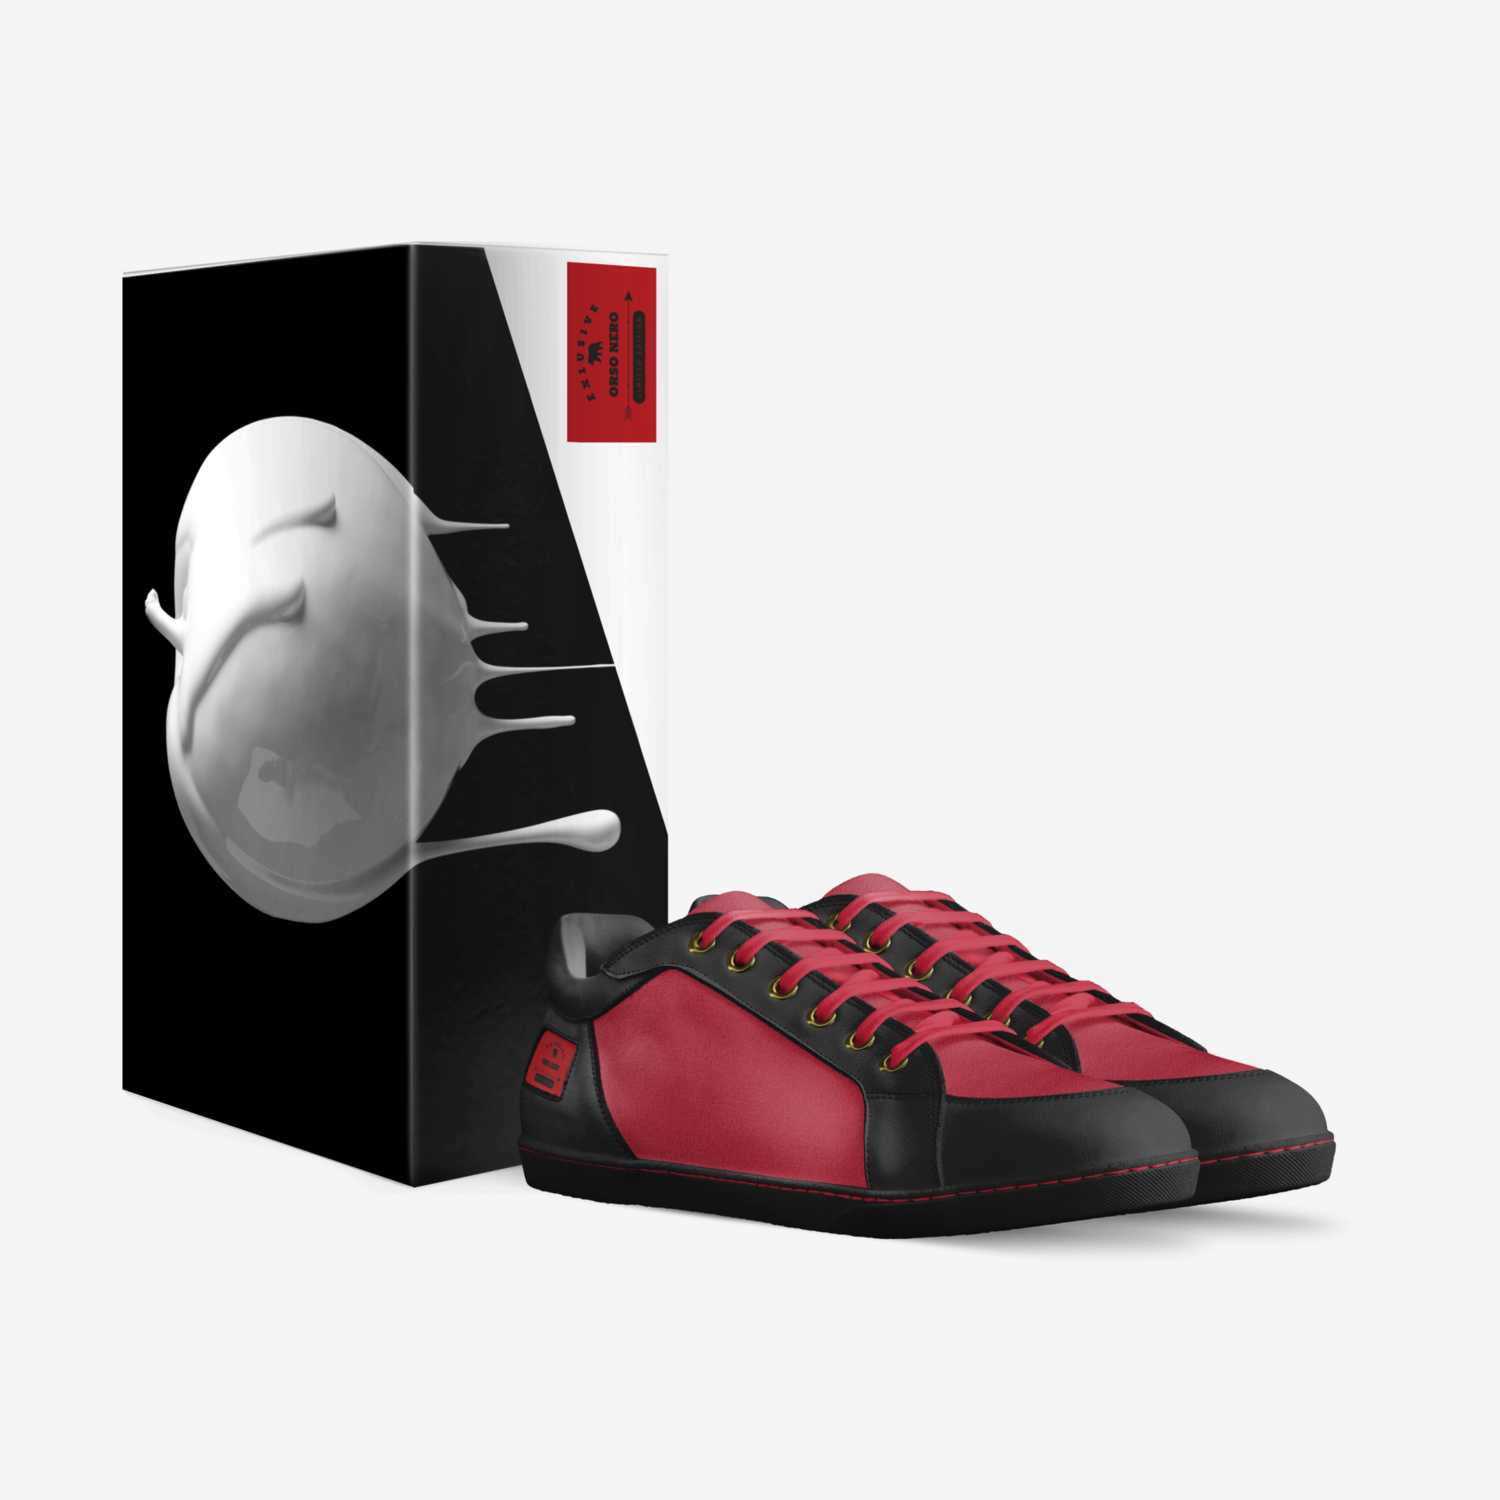 Orso Nero custom made in Italy shoes by Tela Jones | Box view